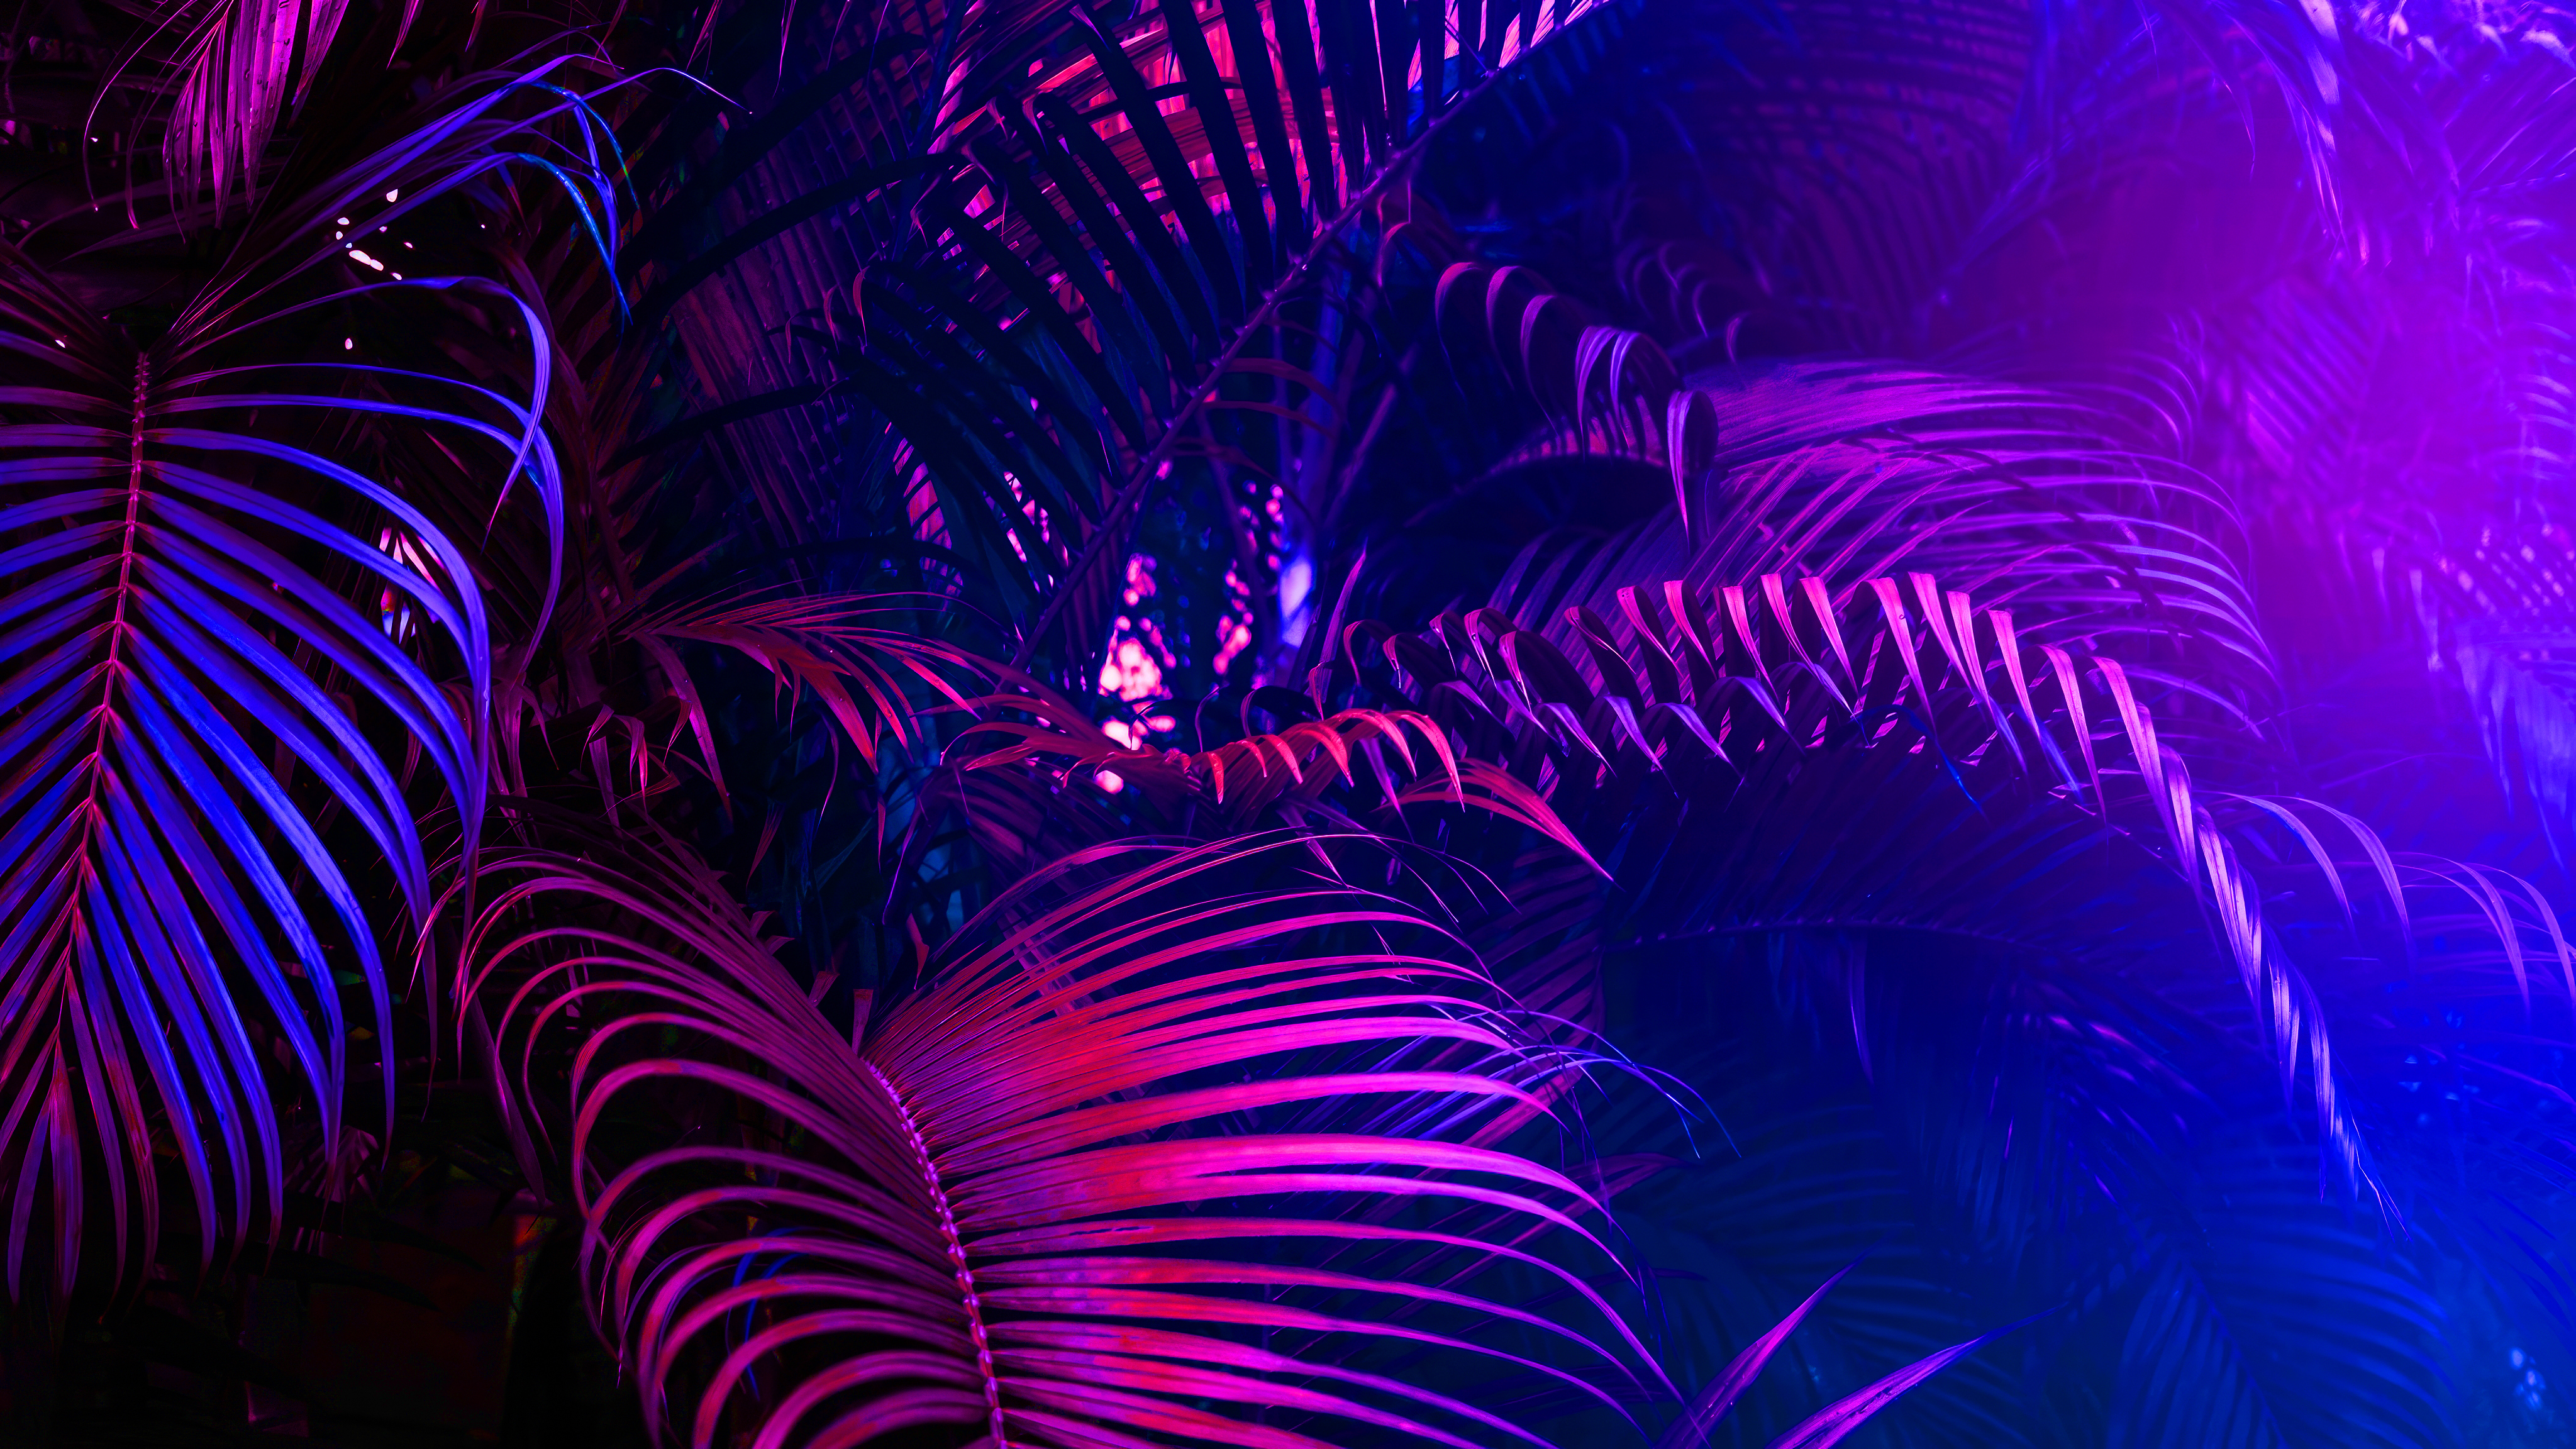 General 4096x2304 ferns blue pink red neon bright plants